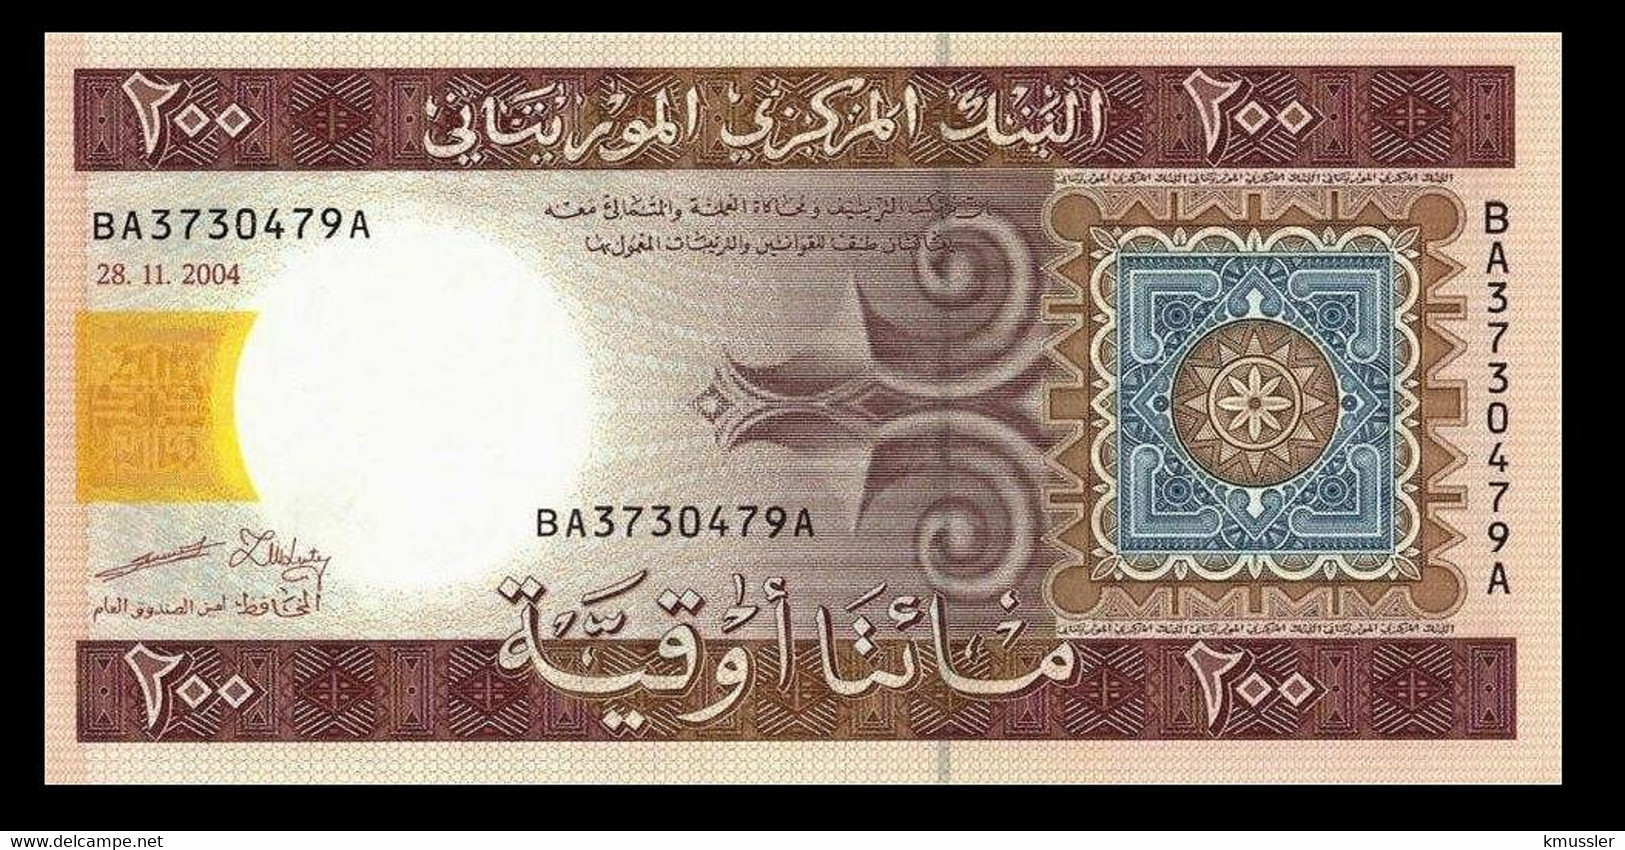 # # # Banknote Mauritanien (Mauritania) 200 Ouguiya 2004 UNC # # # - Mauritanië